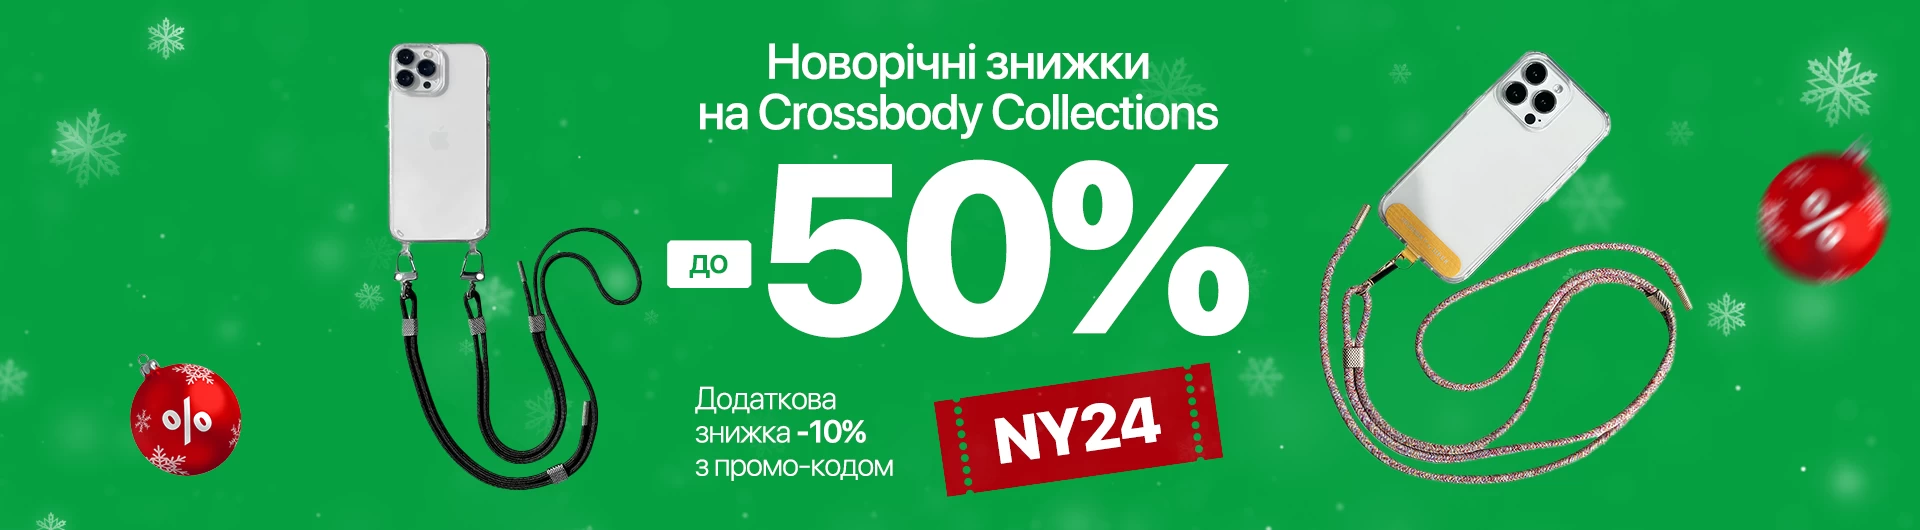 Crossbody Collections - покупай подарок у Ивана Чехла